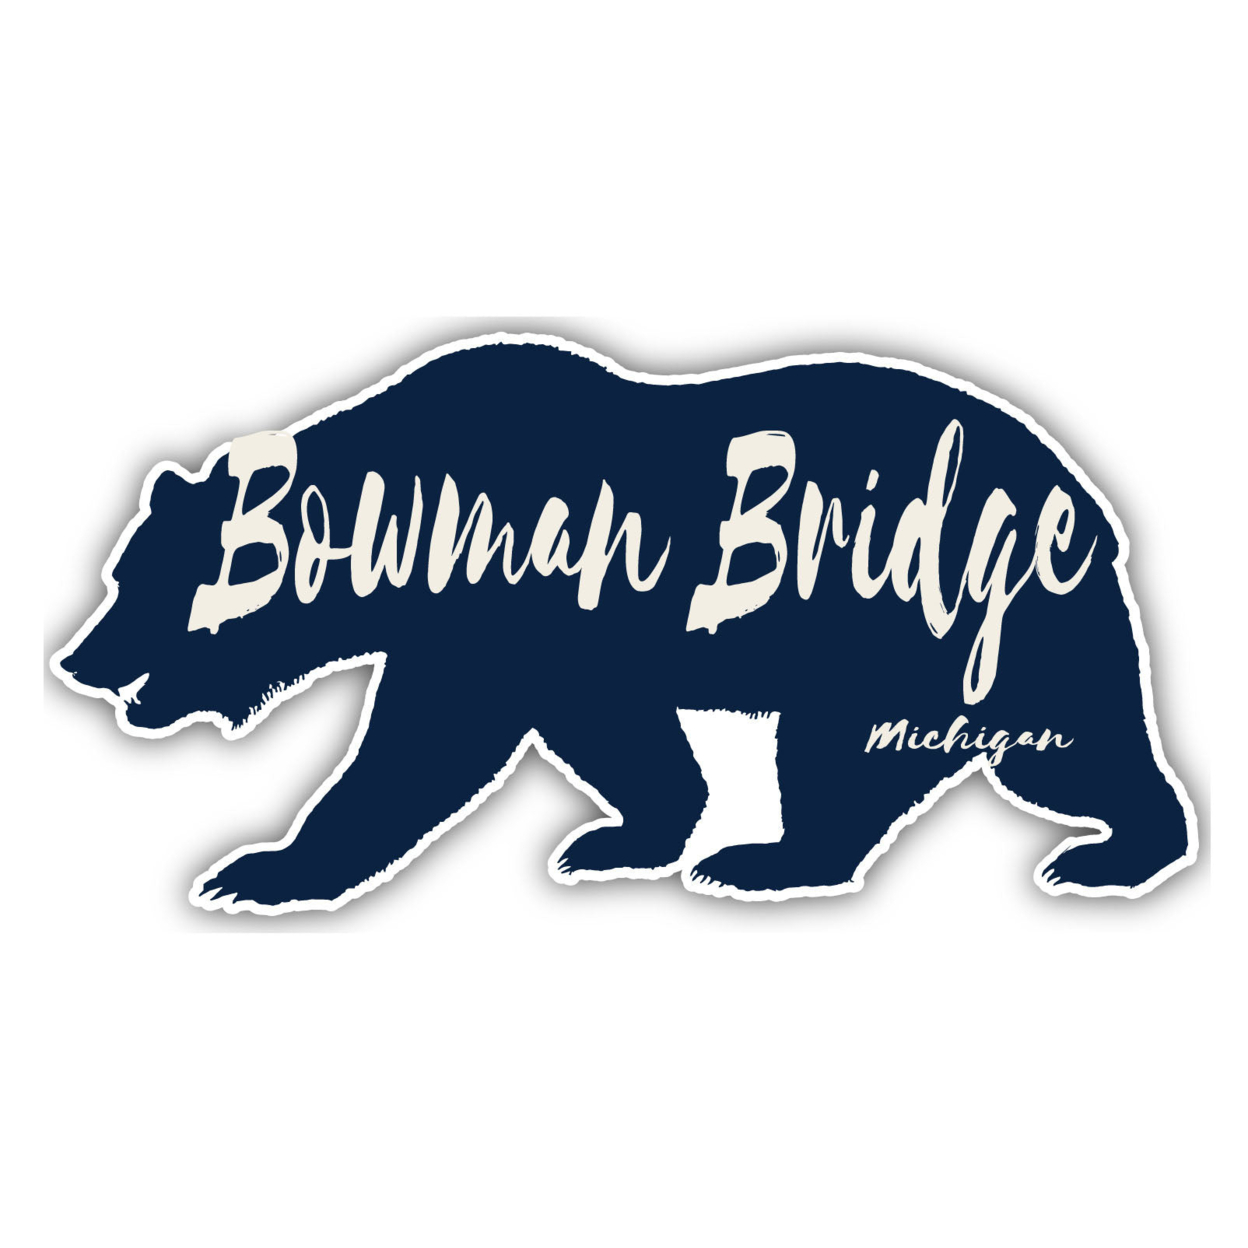 Bowman Bridge Michigan Souvenir Decorative Stickers (Choose Theme And Size) - Single Unit, 2-Inch, Bear